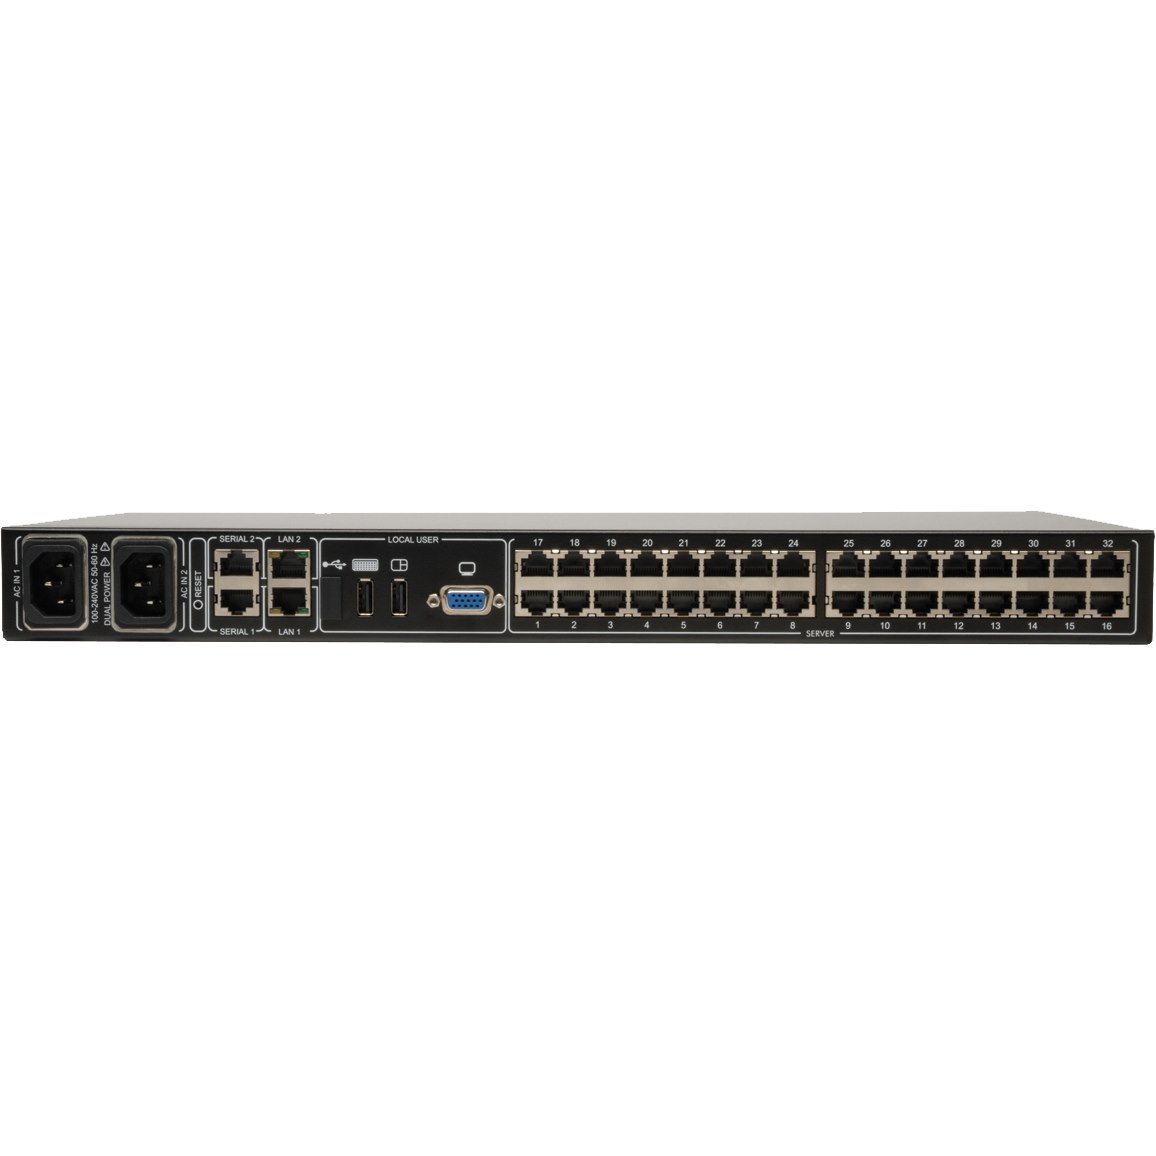 Tripp Lite by Eaton NetCommander 32-Port Cat5 KVM over IP Switch - 2 Remote + 1 Local User, 1U Rack-Mount